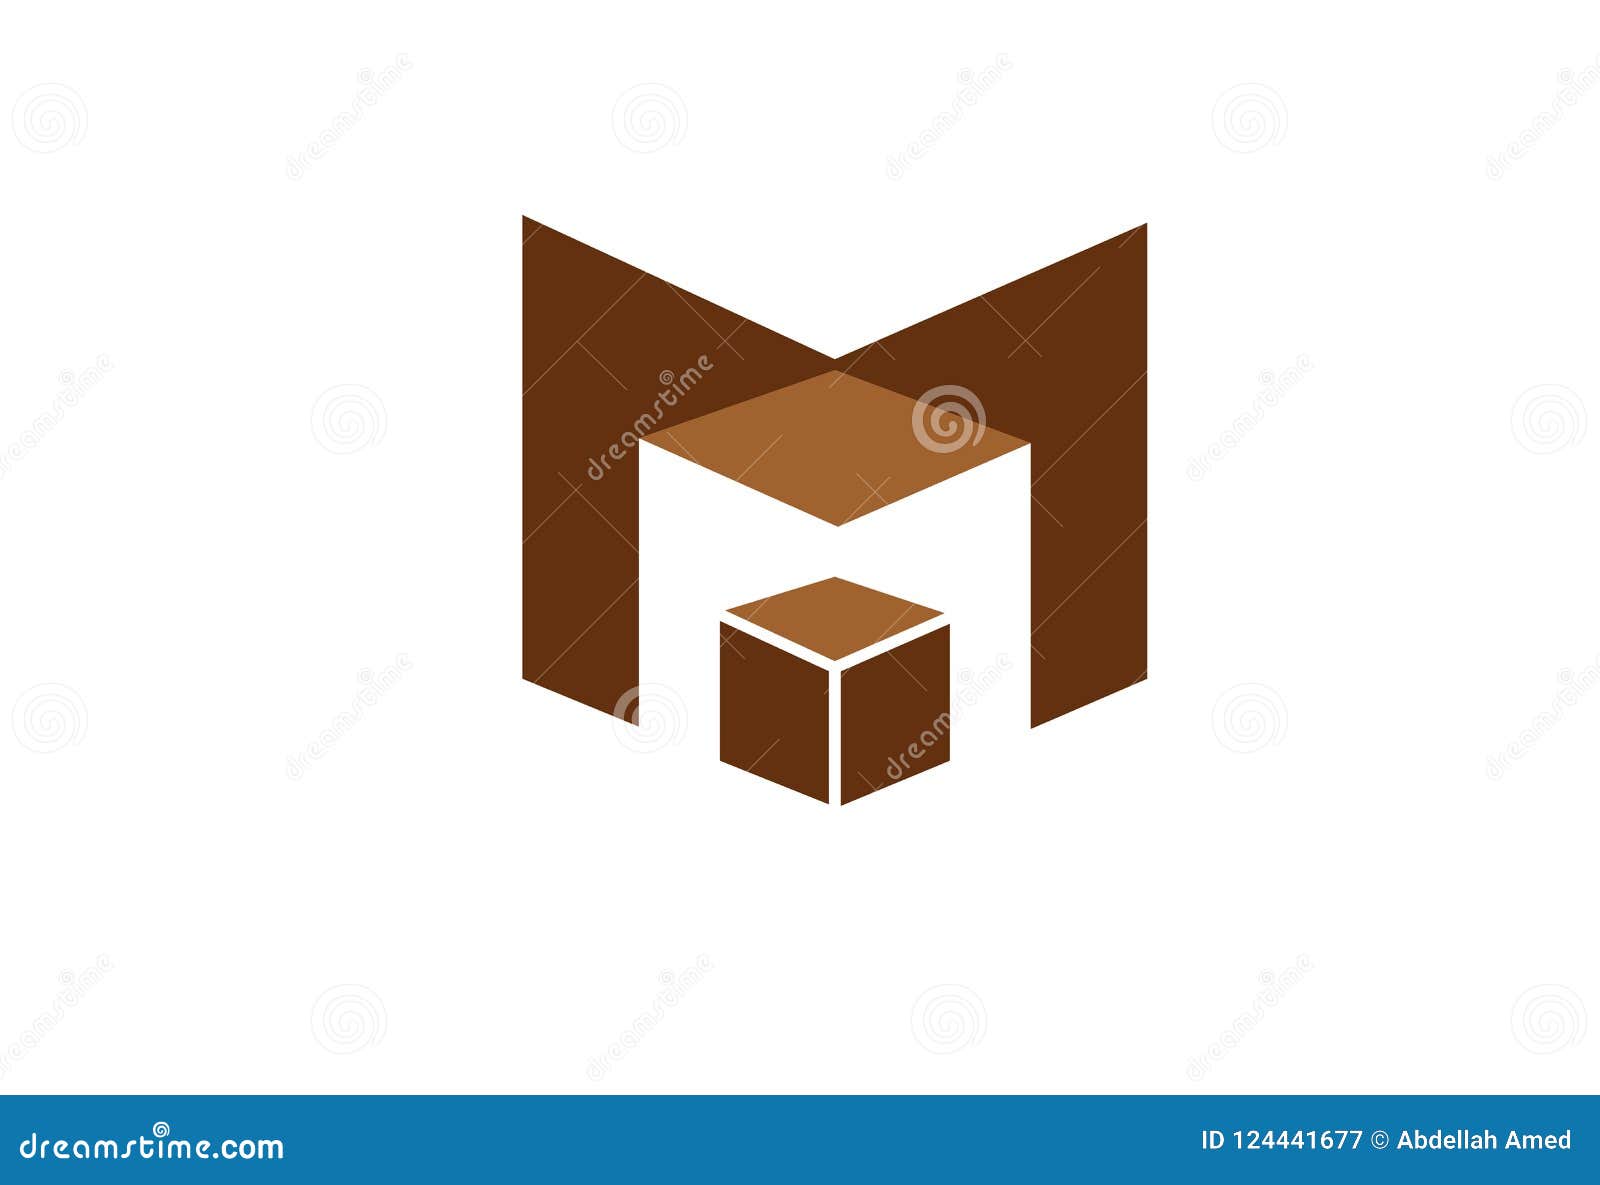 https://thumbs.dreamstime.com/z/creative-m-letter-magic-box-logo-symbol-design-creative-m-letter-magic-box-logo-symbol-design-illustration-124441677.jpg